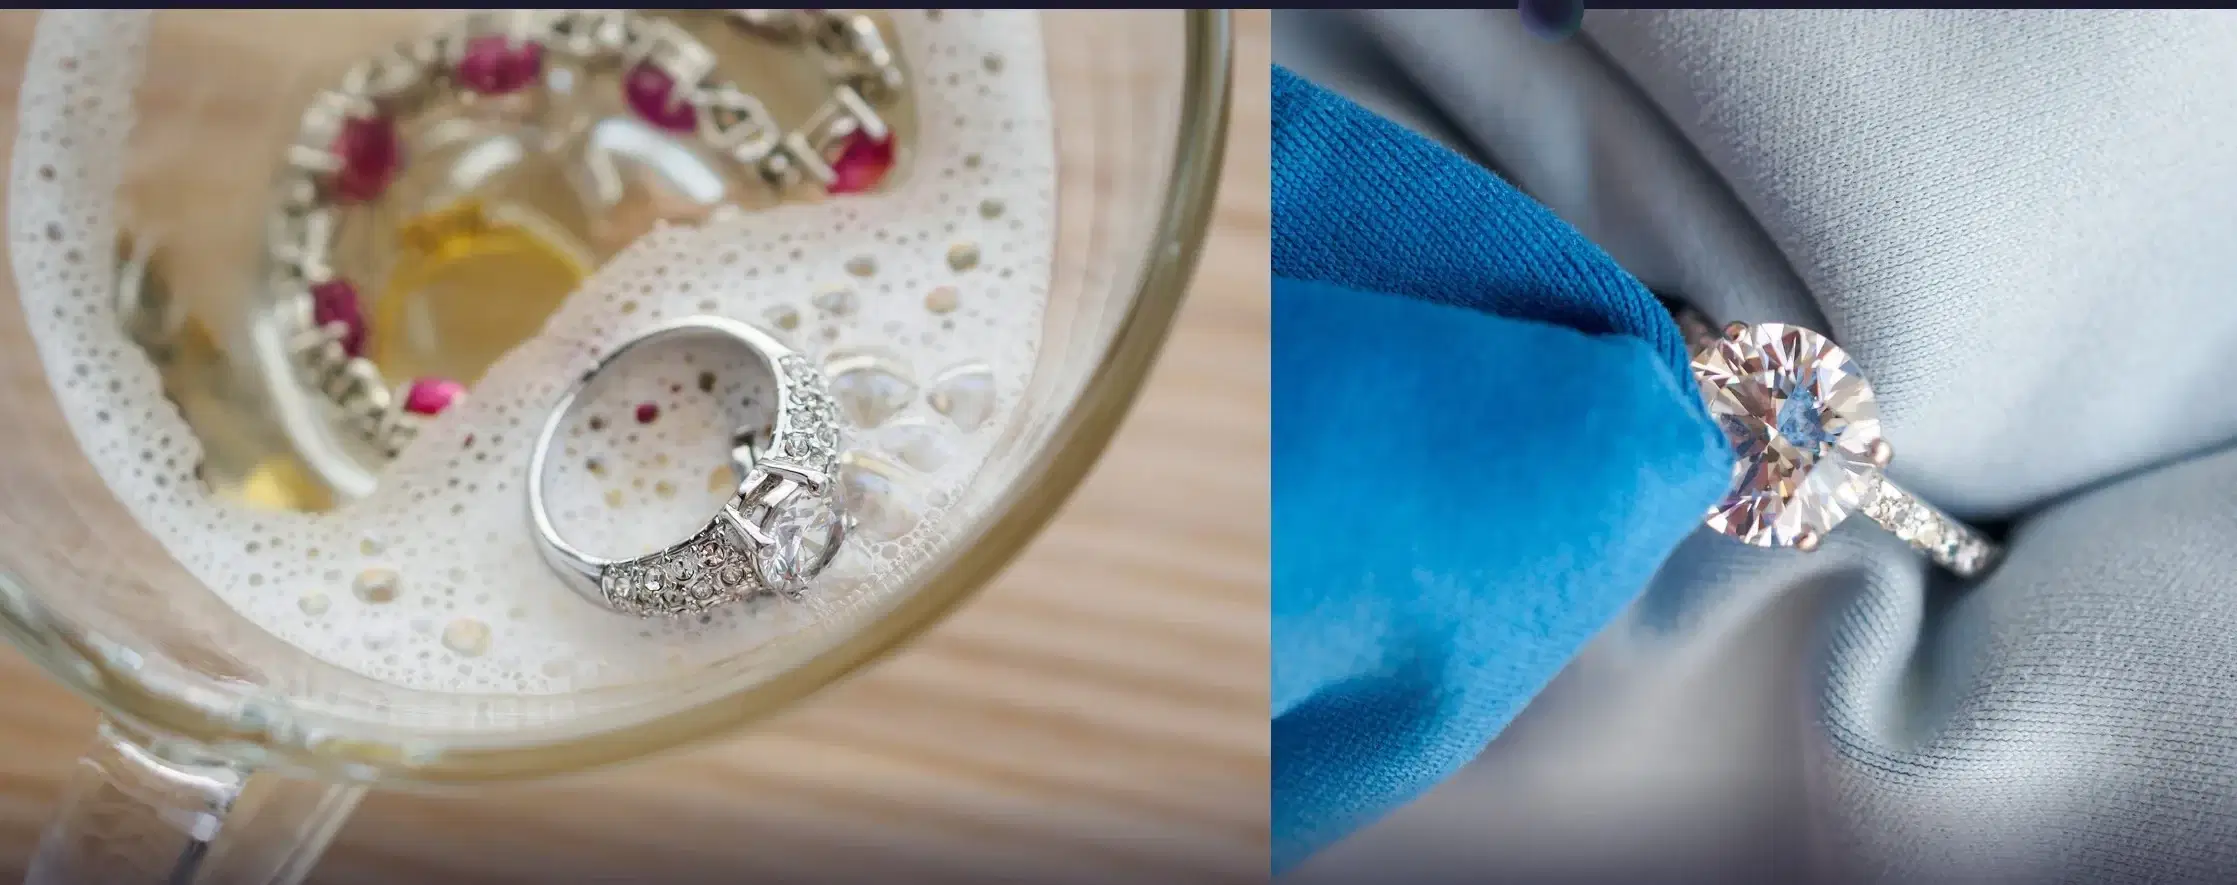 Cleaning Diamond Jewelry